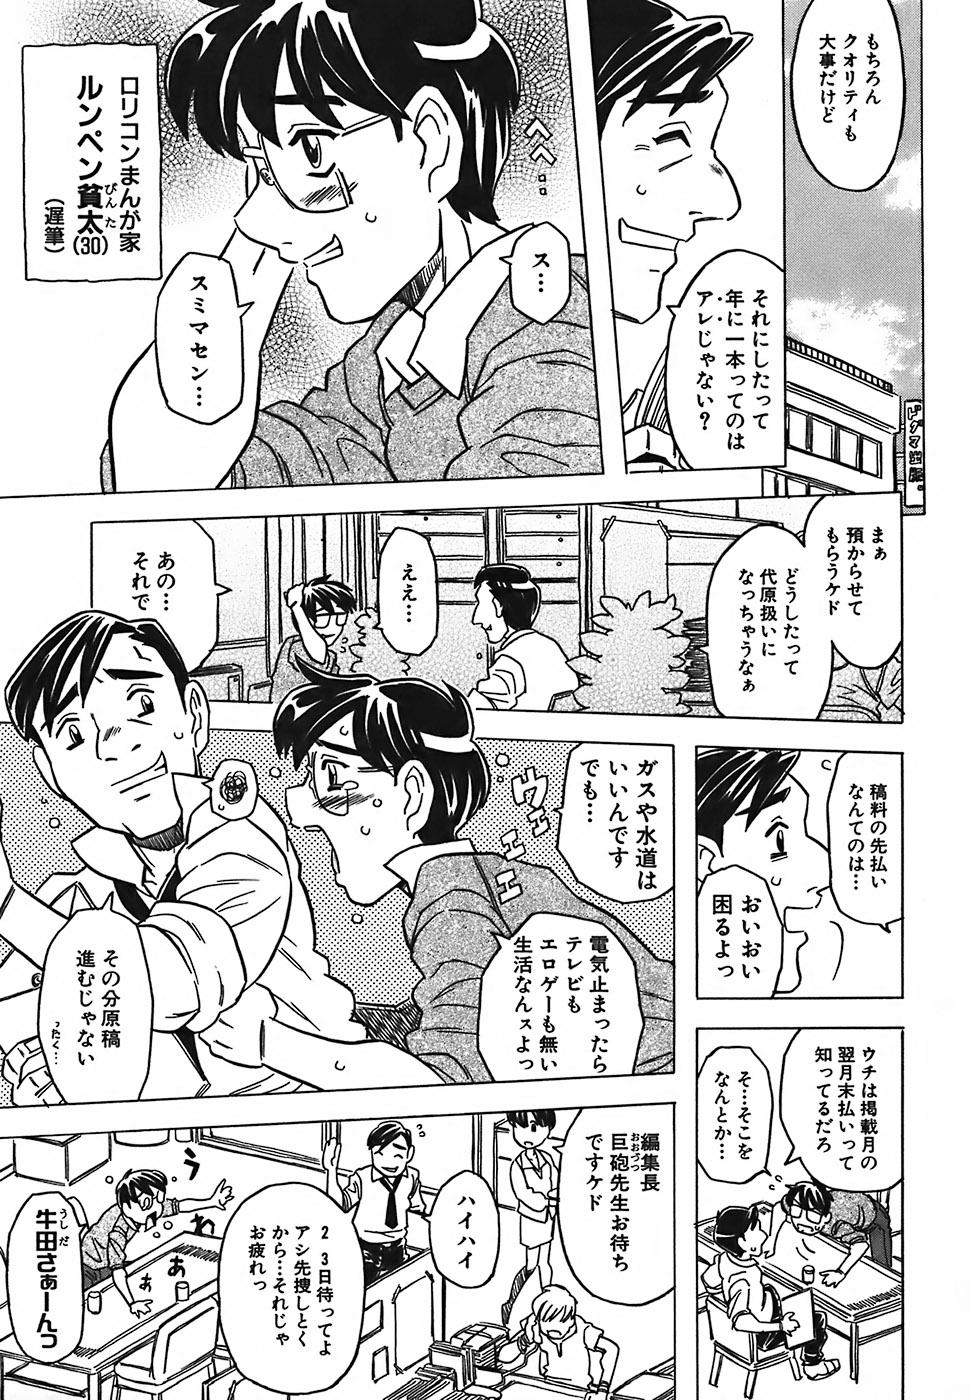 Tesao Cannon Sensei Tobashisugi Shesafreak - Page 9